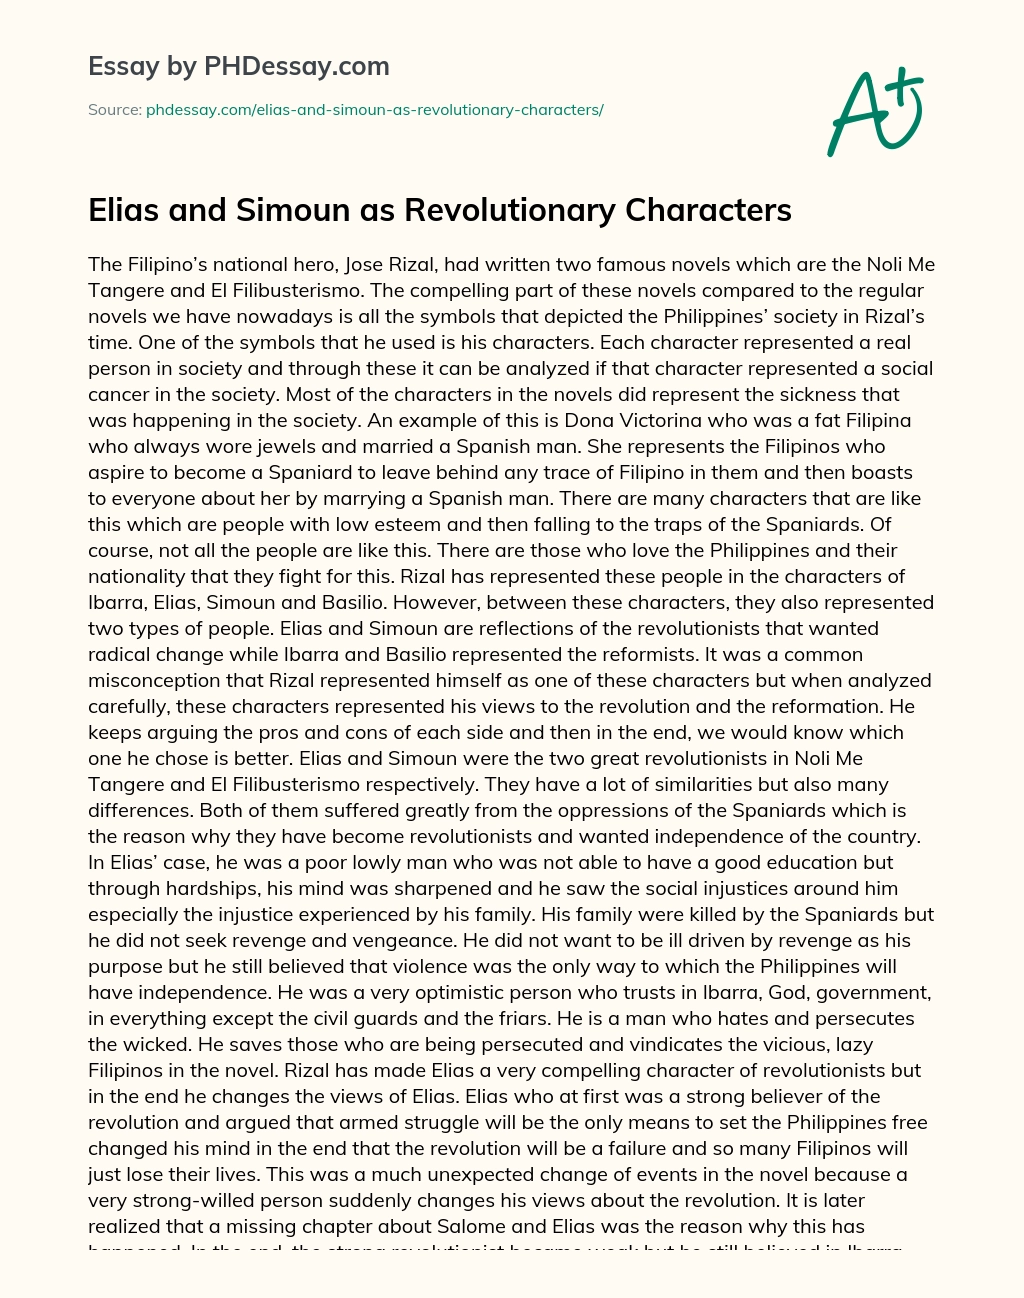 Elias and Simoun as Revolutionary Characters essay